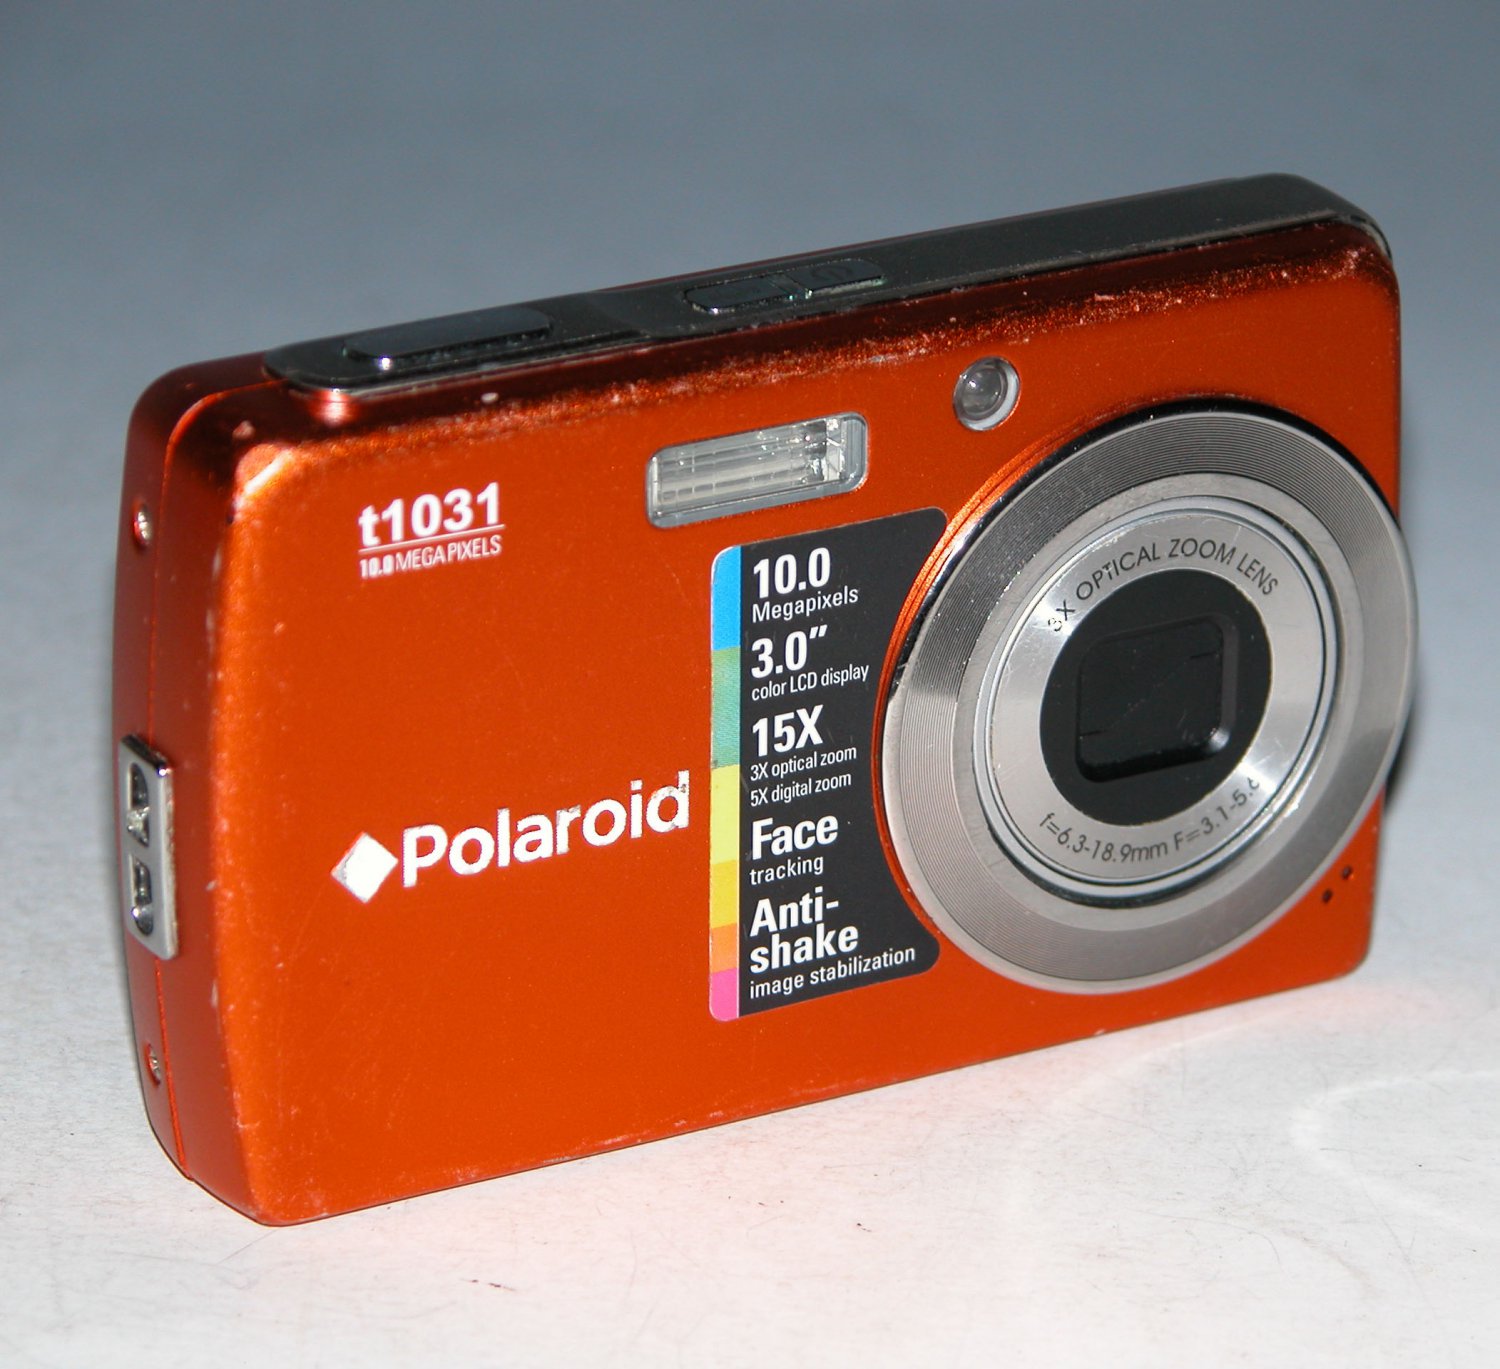 Polaroid t1031 10.0MP Digital Camera - Orange